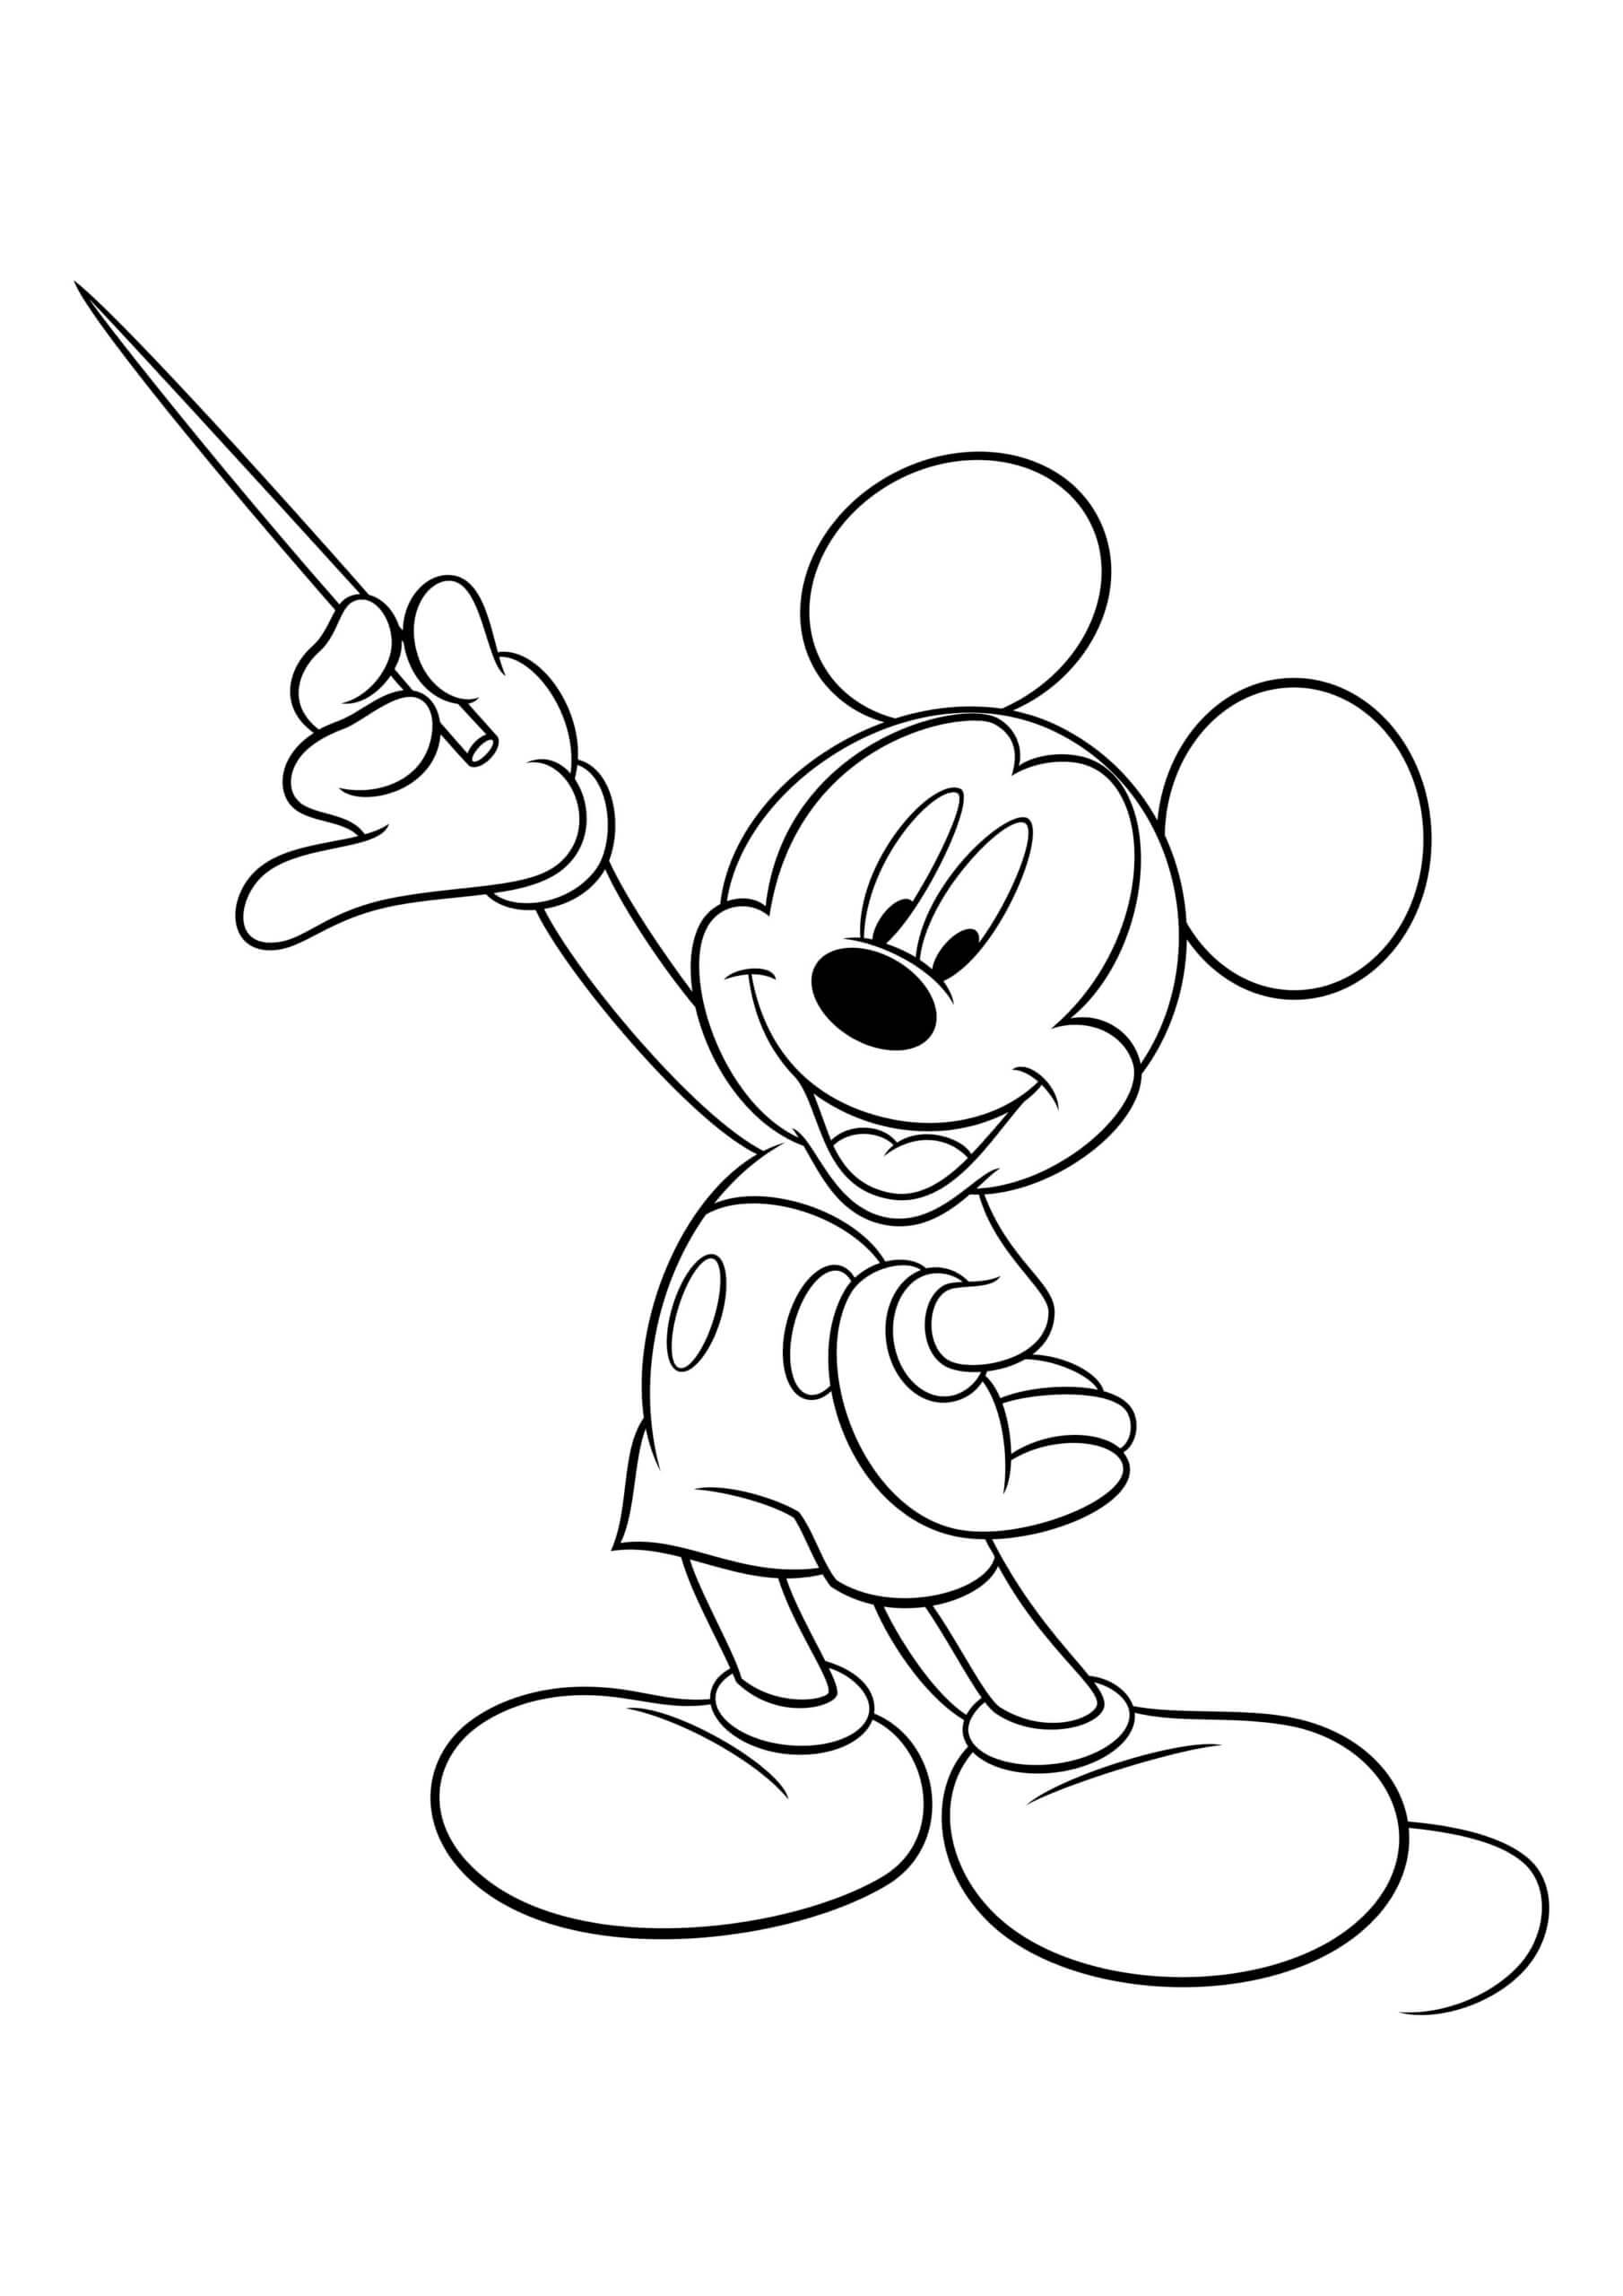 Coloriage Mickey Mouse avec un Bâton